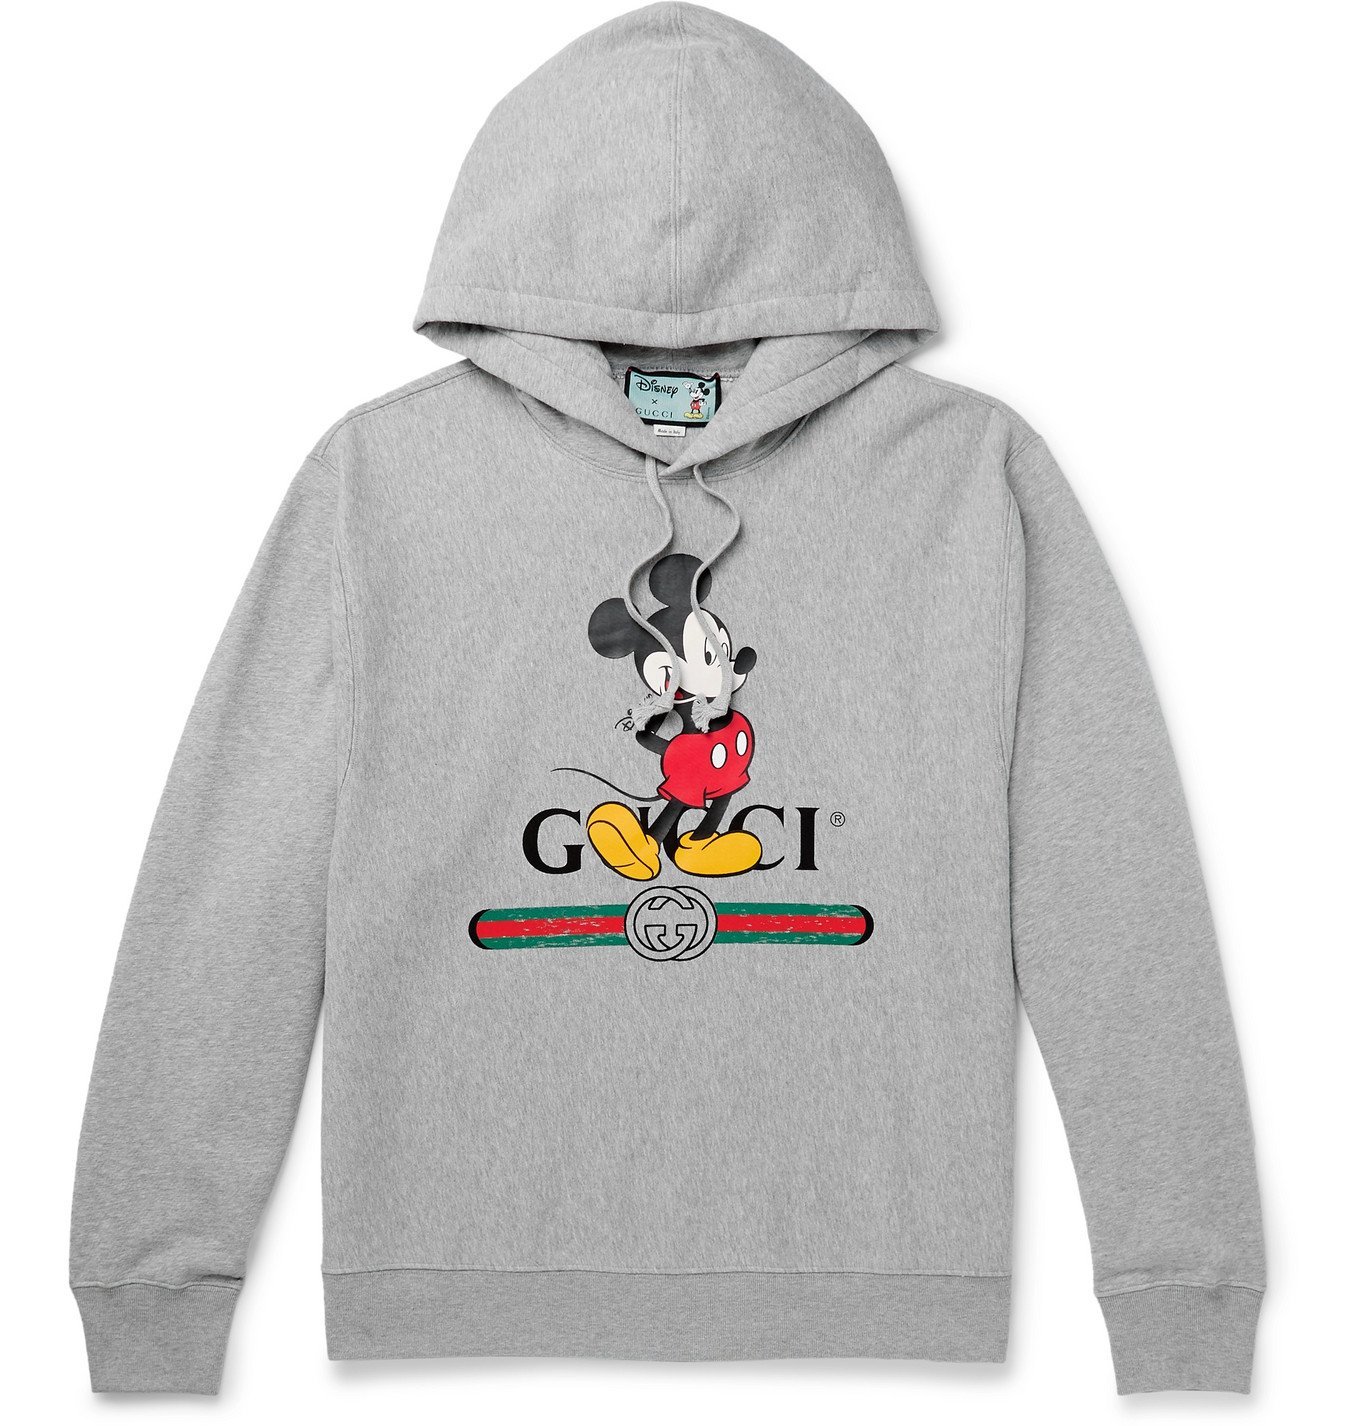 gucci gray hoodie